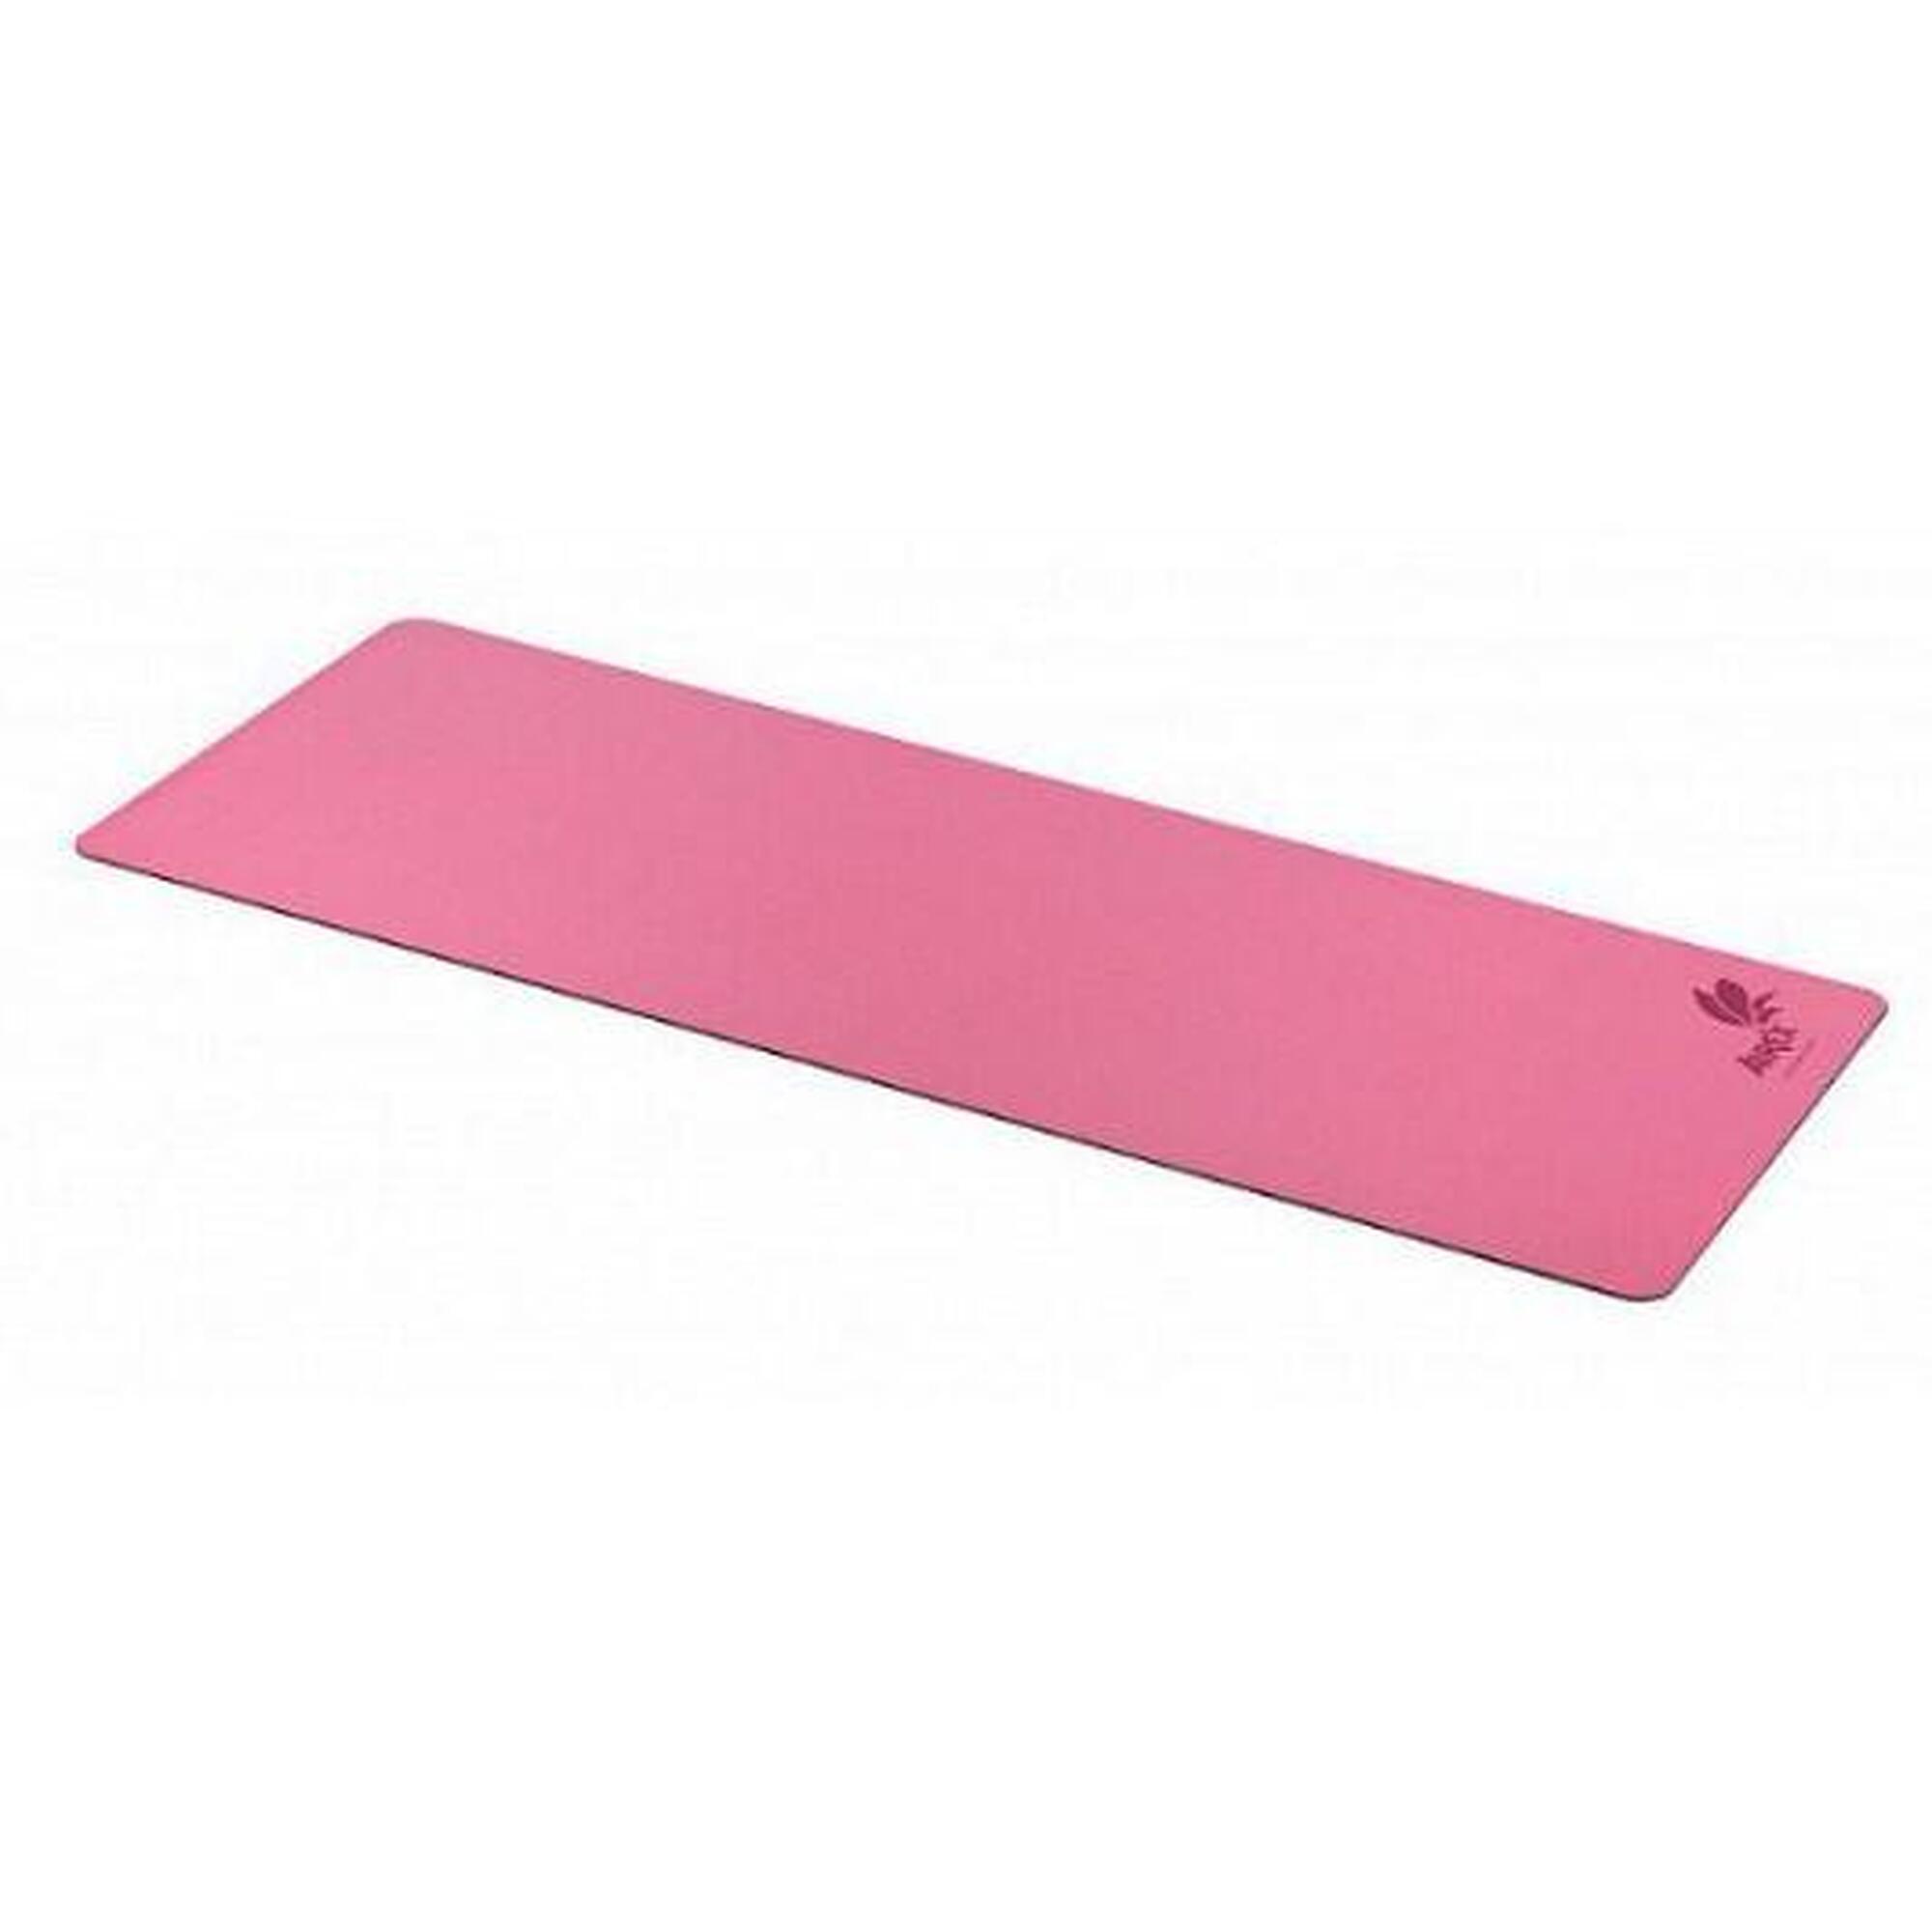 Eco Grip Mat 瑜珈墊4MM - 粉紅色